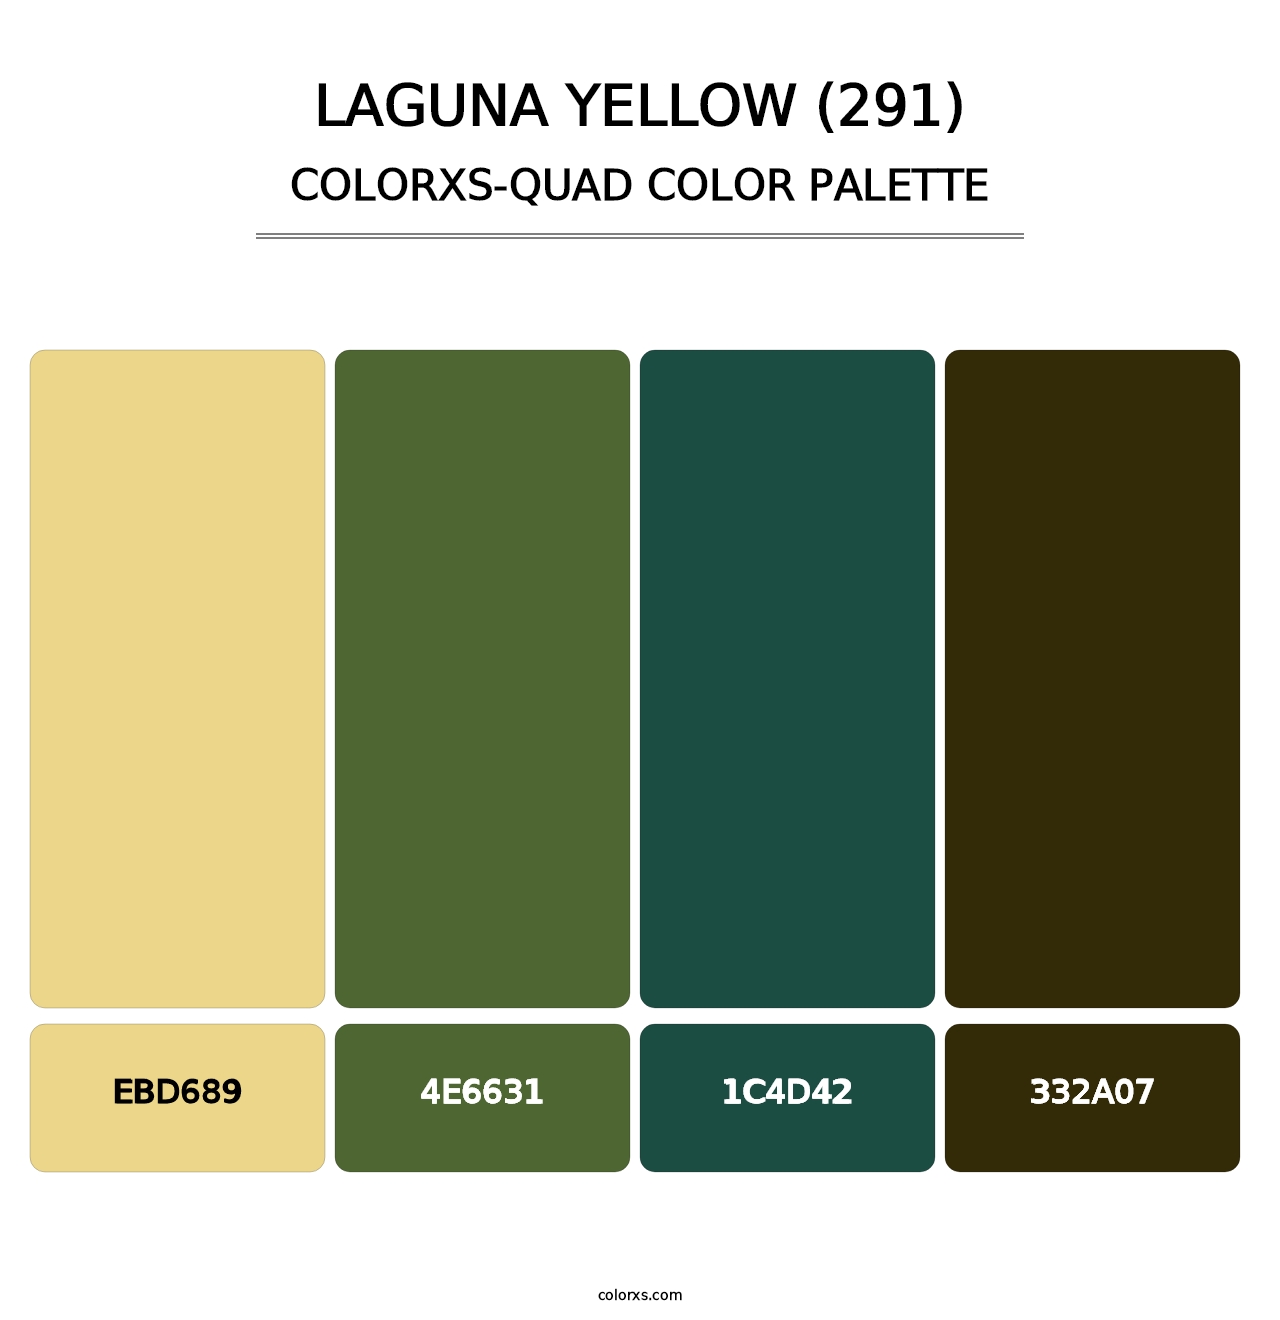 Laguna Yellow (291) - Colorxs Quad Palette